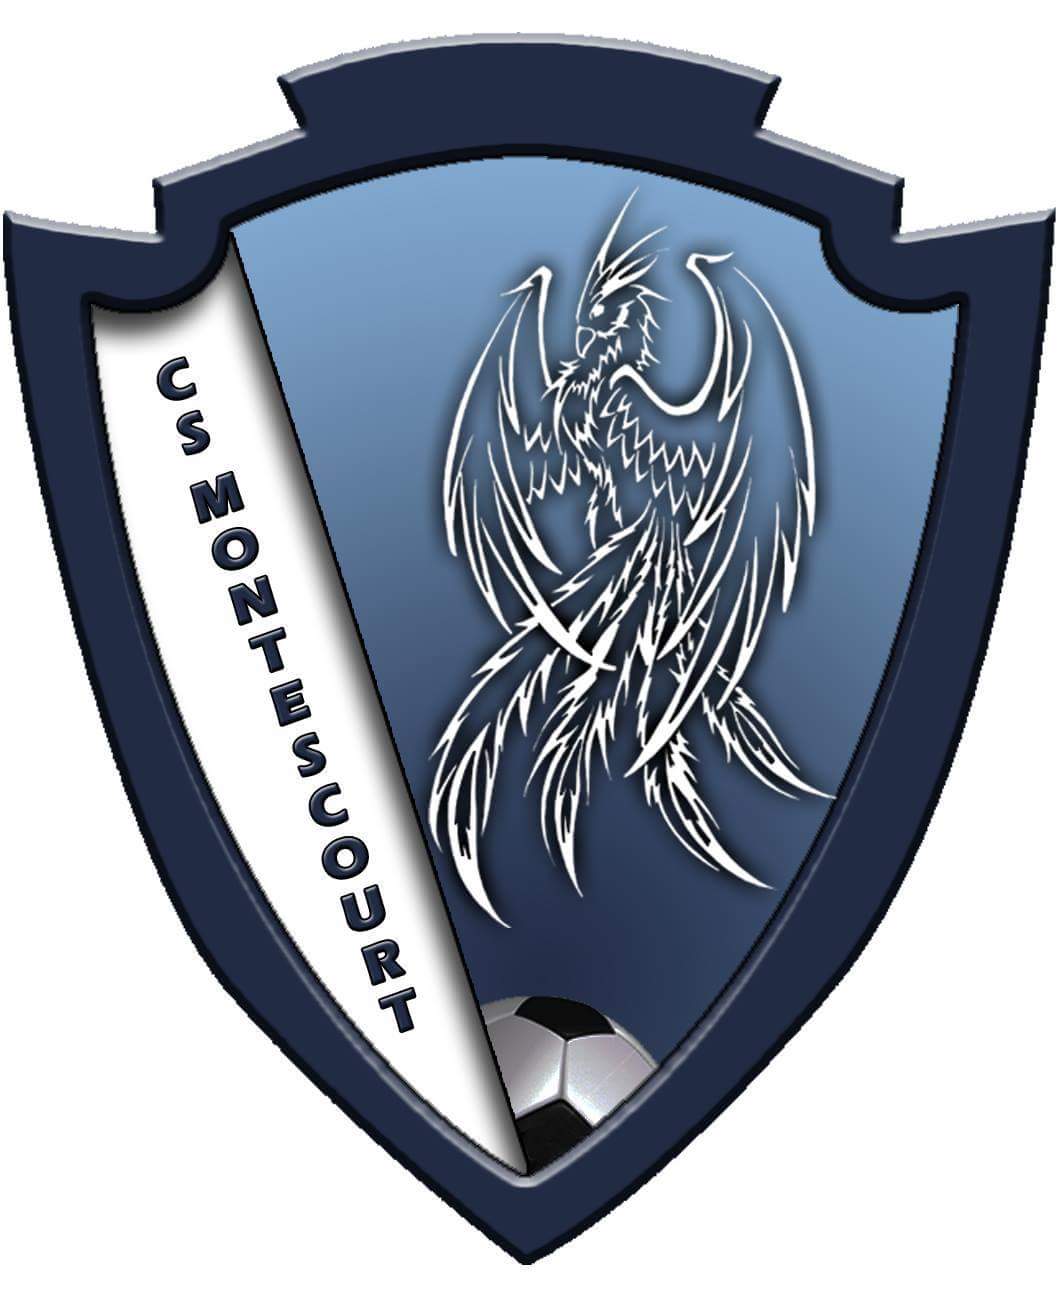 Logo du club de pétanque Club sportif de montescourt - club à Montescourt-Lizerolles - 02440